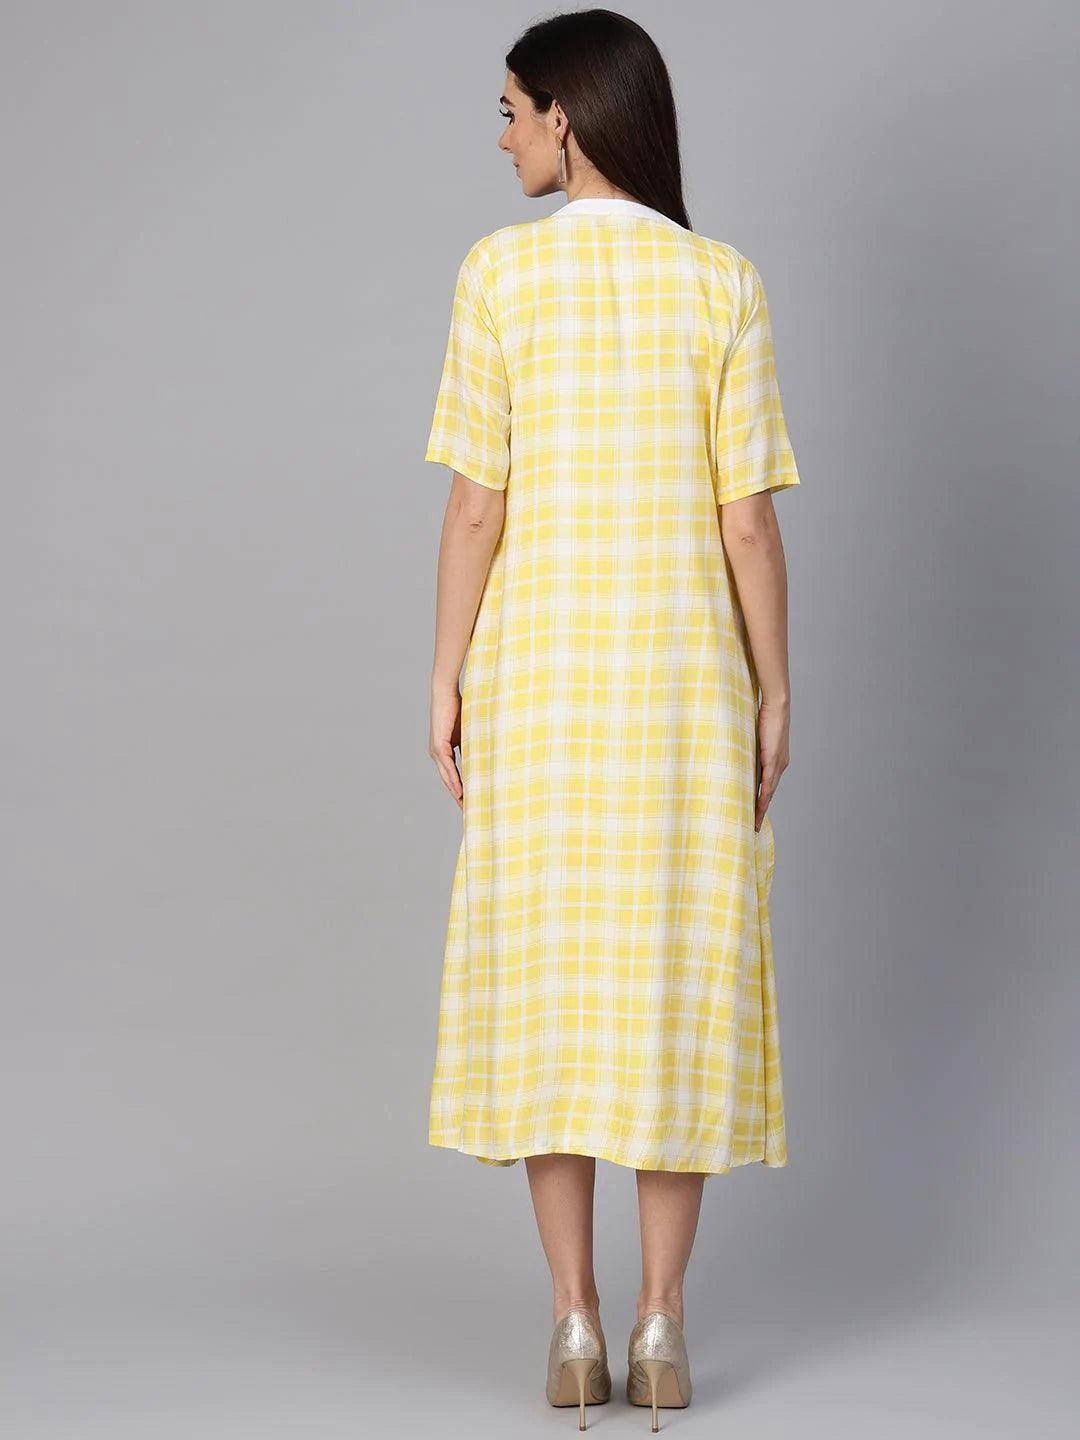 Yellow Checkered Rayon Dress With Jacket - ShopLibas